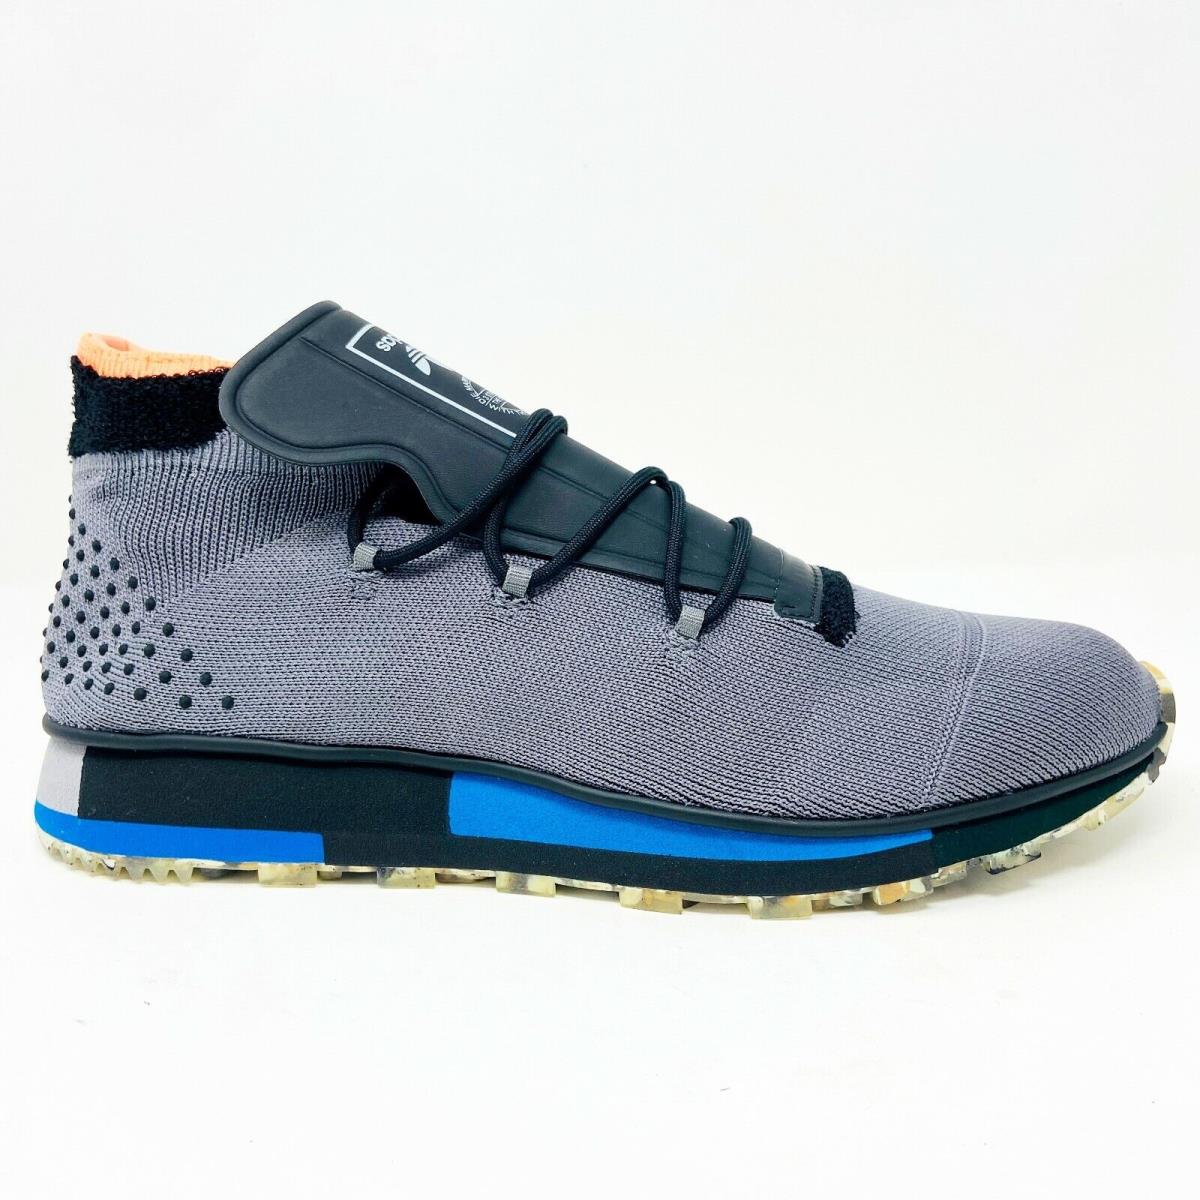 Adidas Alexander Wang AW Run Mid ST Sraig Gray Black Orange Mens Size 8 AC6844 | 692740427614 - Adidas shoes - Gray | SporTipTop